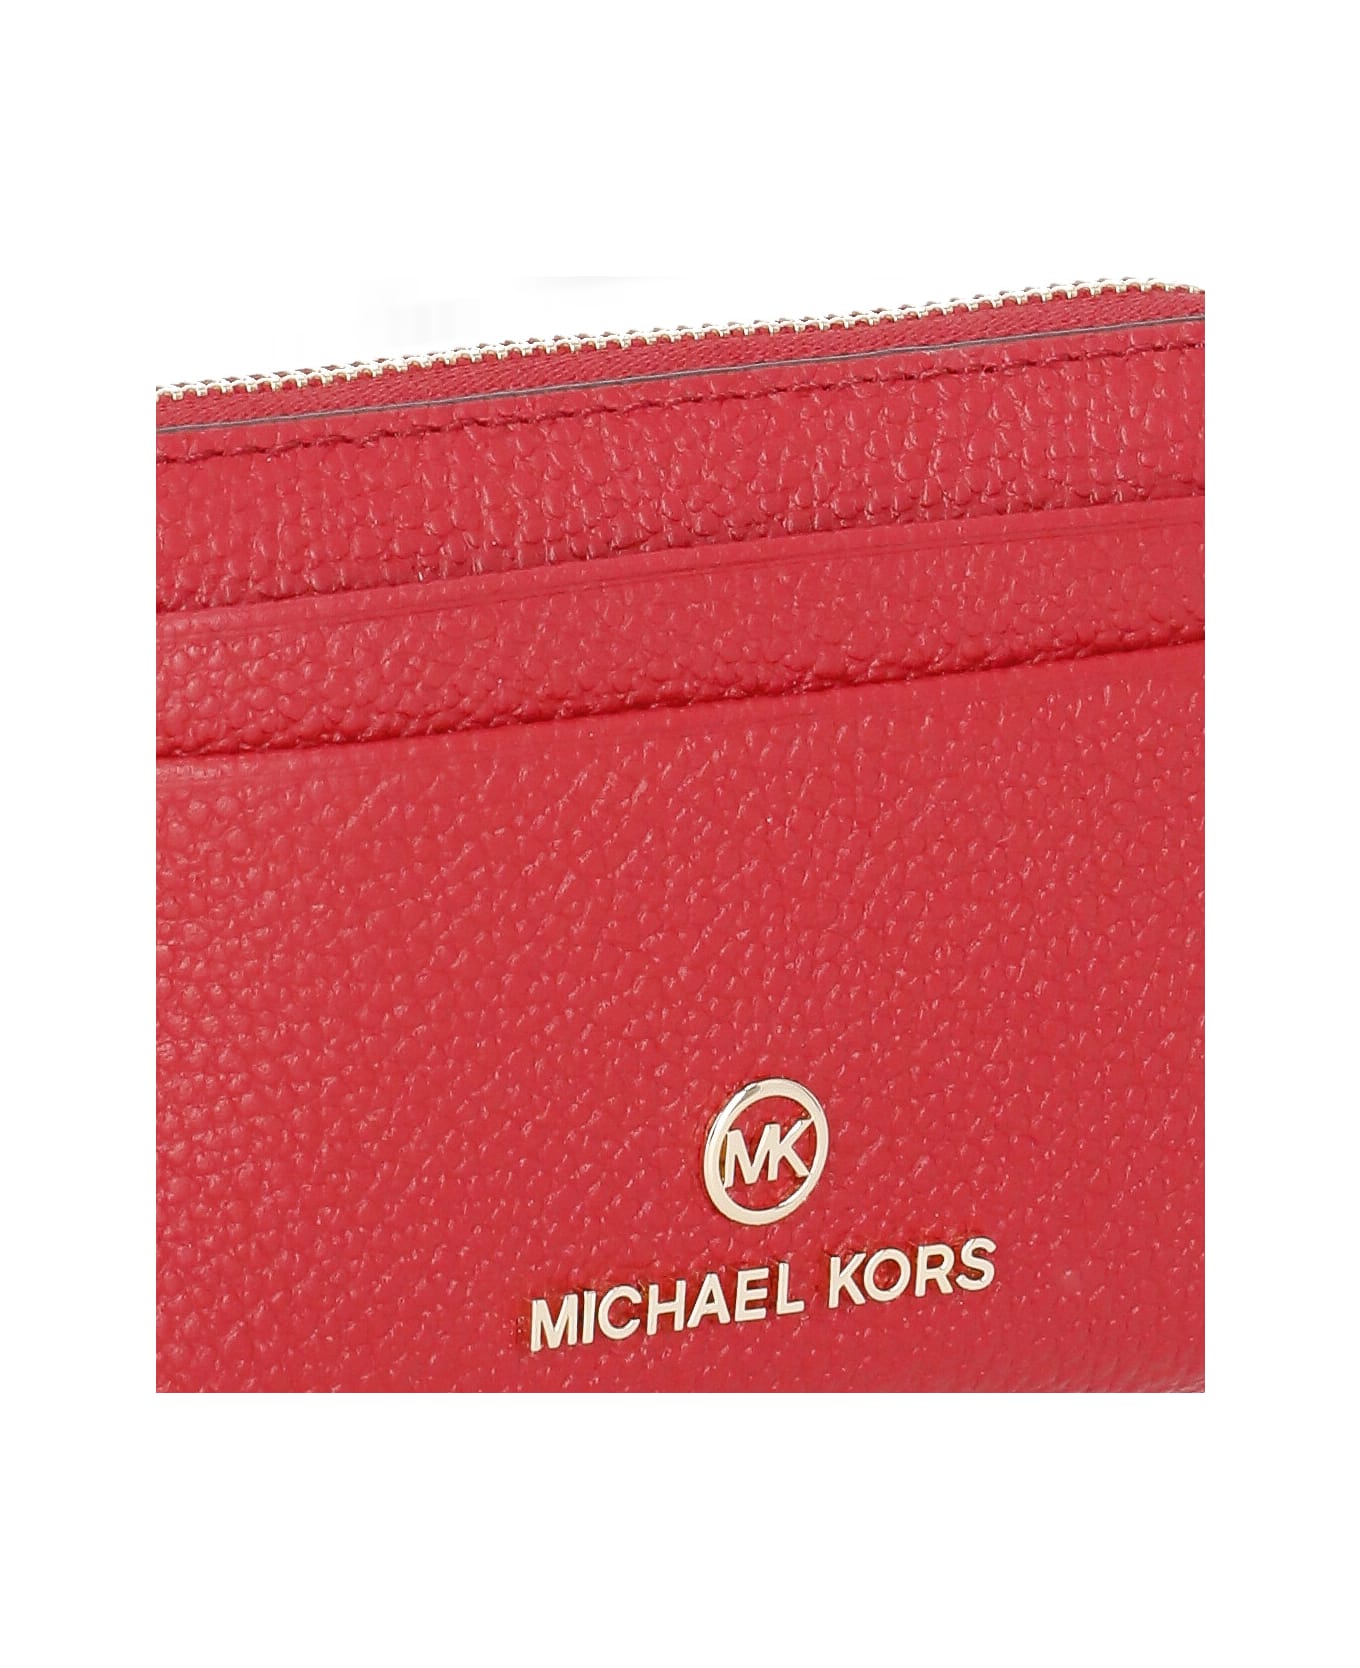 MICHAEL Michael Kors Jet Set Wallet - Red 財布